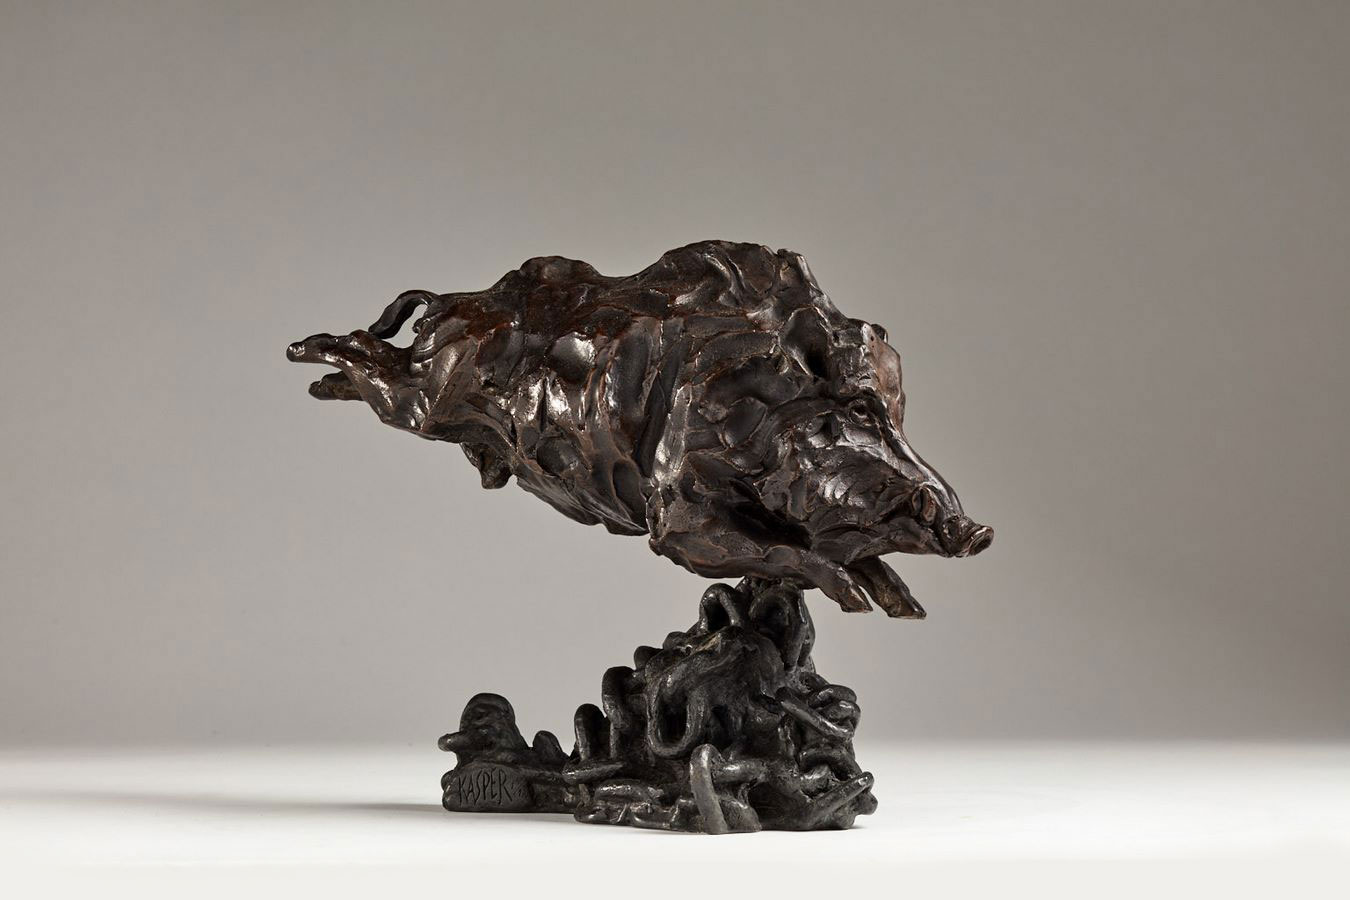 Kasper-sculpteur-_Solitaire_-bronze